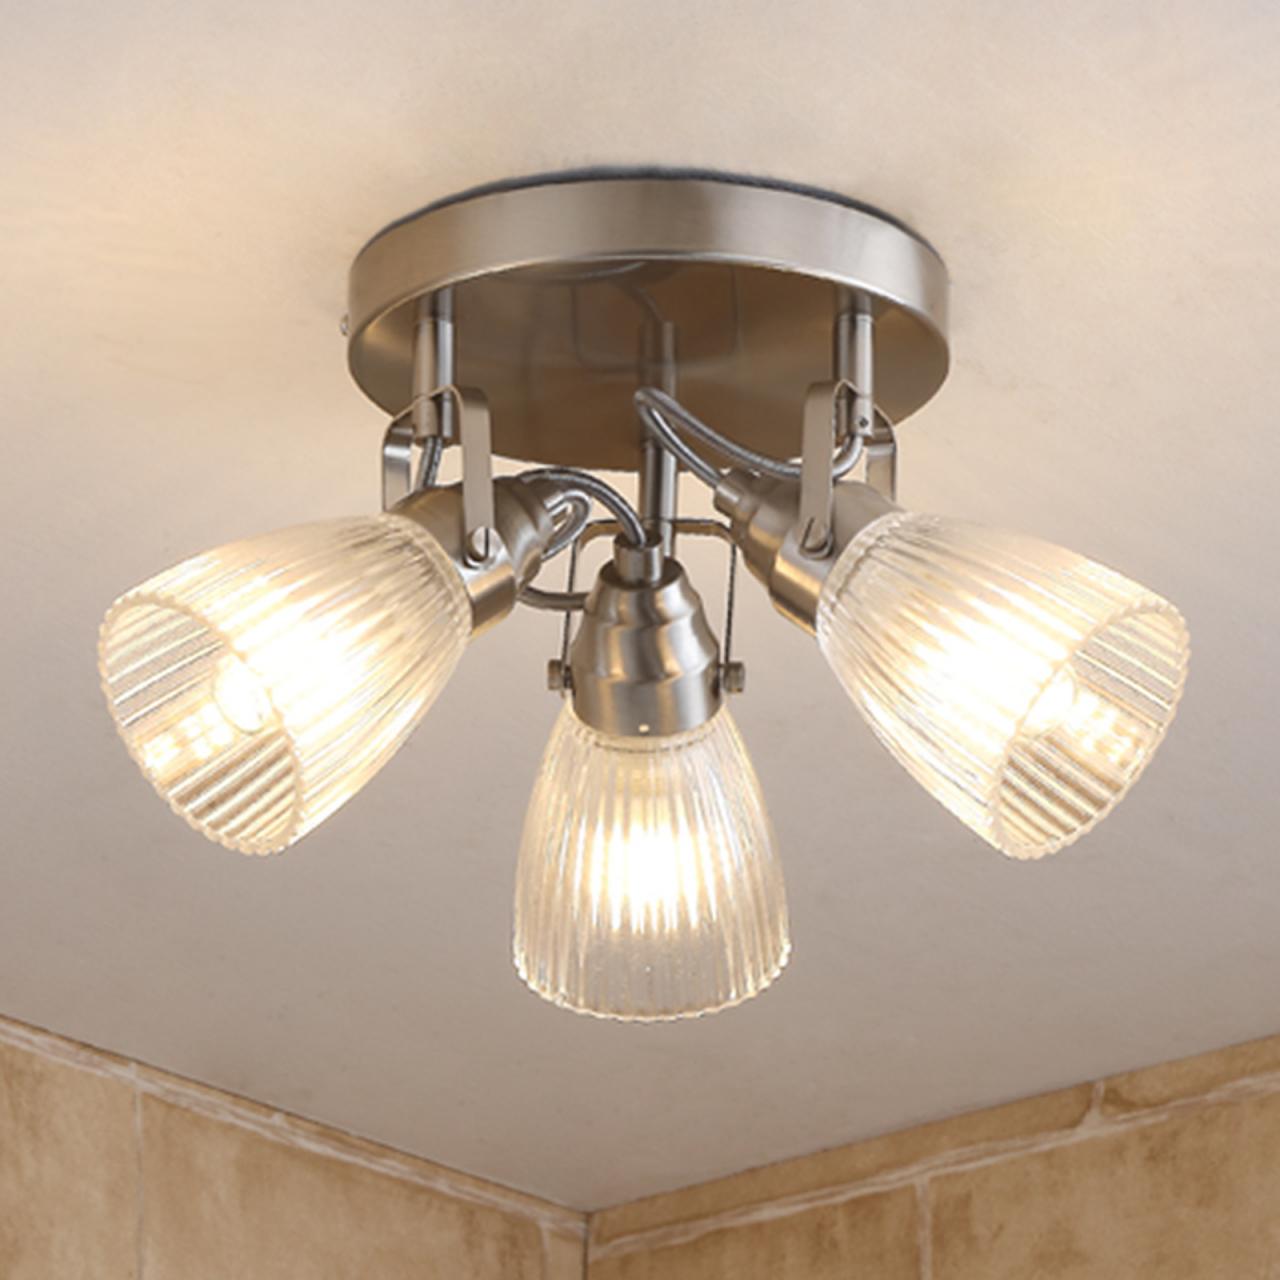 Round LED bathroom ceiling light Kara fluted glass Lights.co.uk